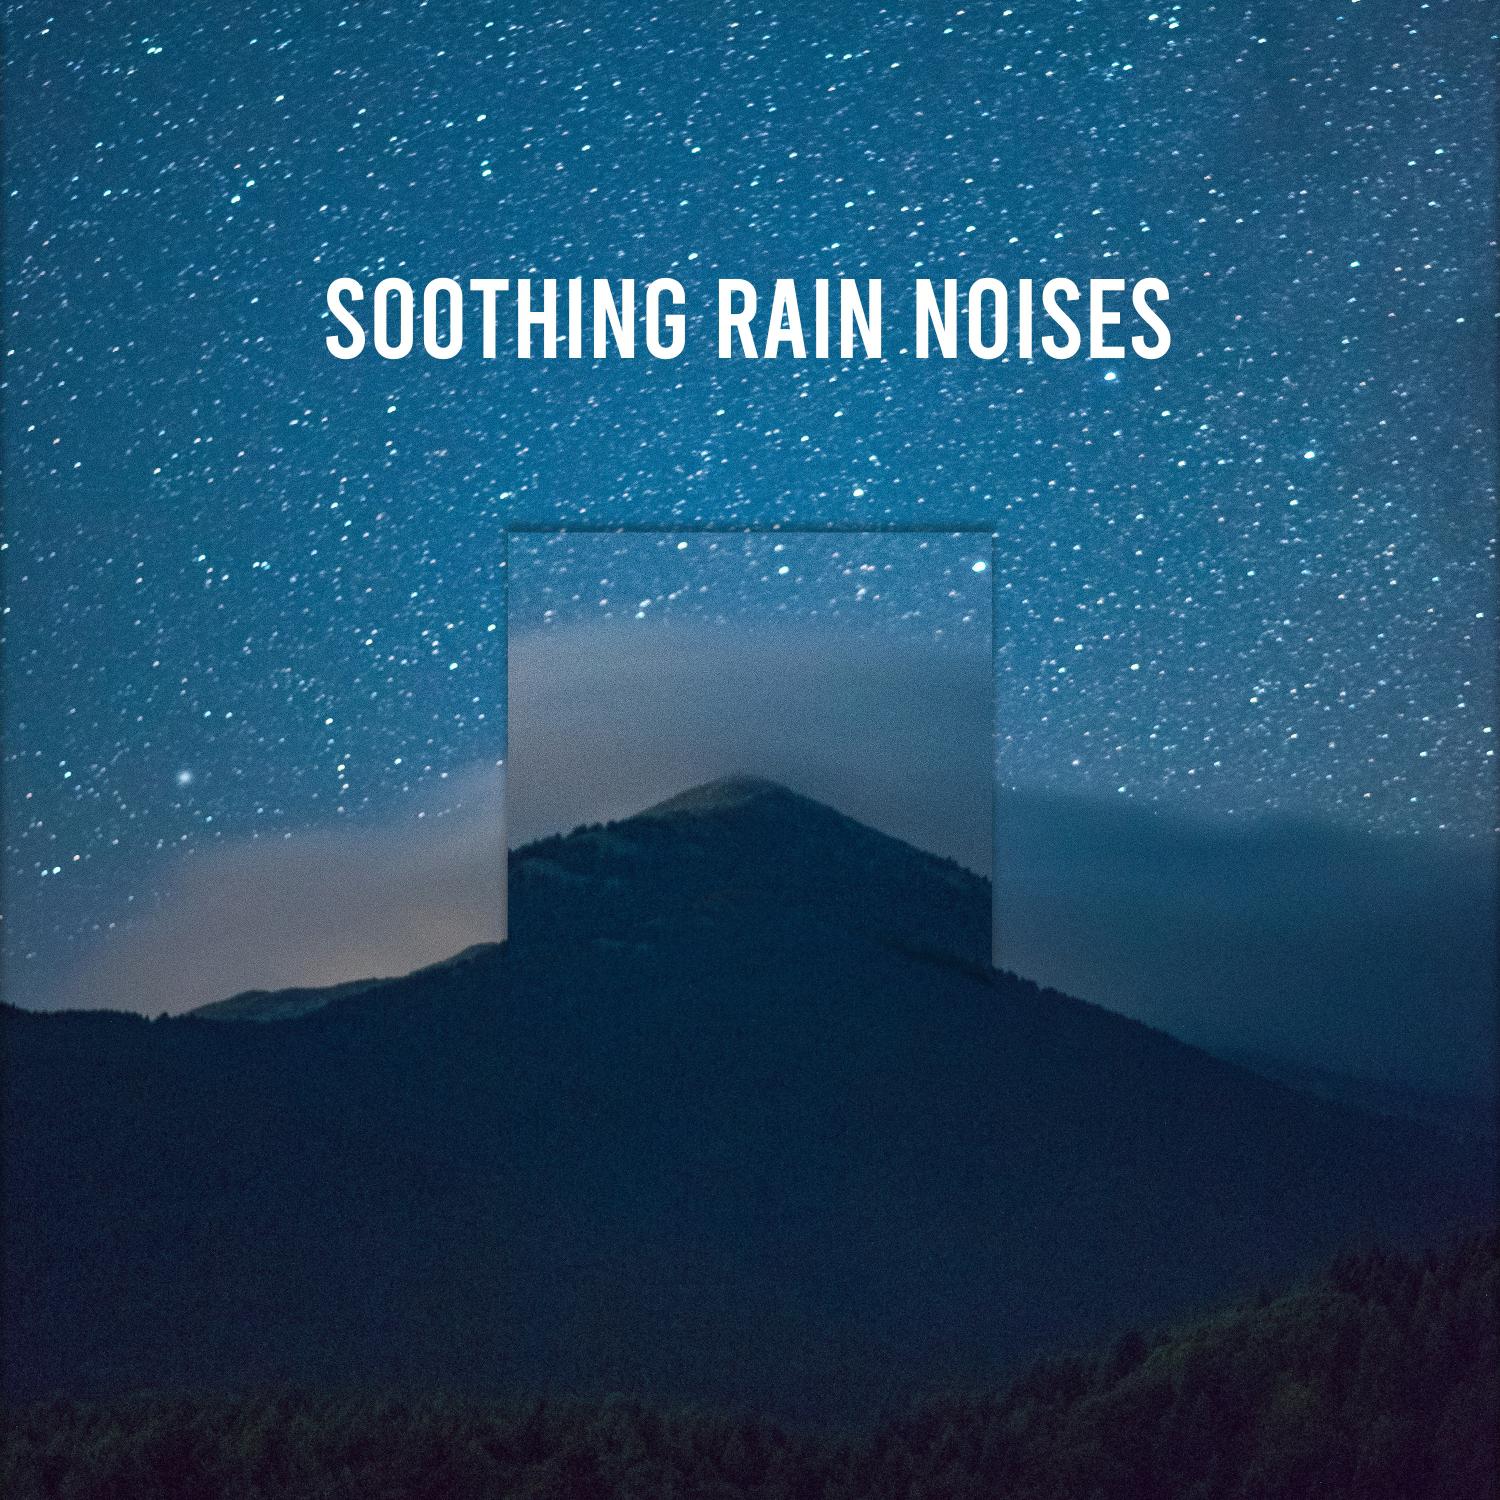 19 Soothing Rain Noises for Sleeping